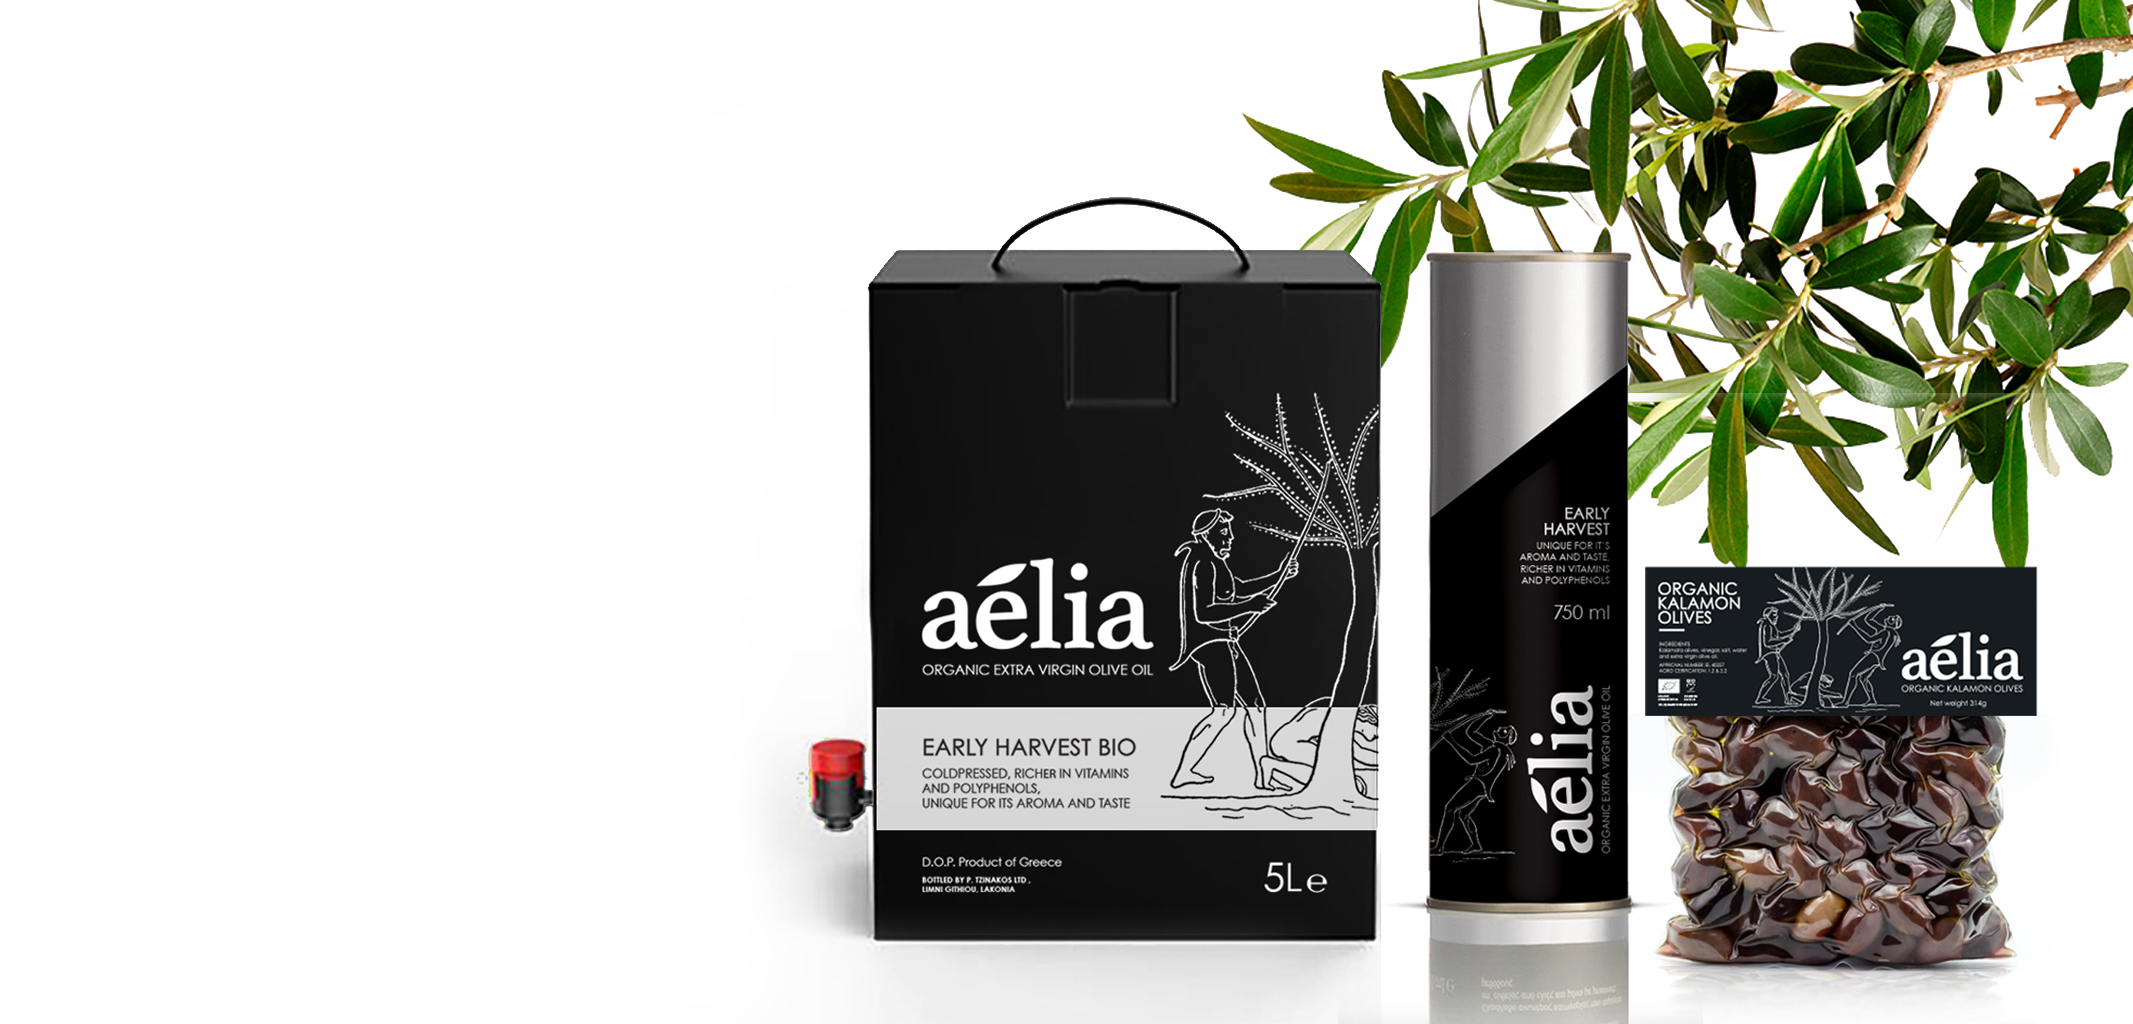 aelia organic products